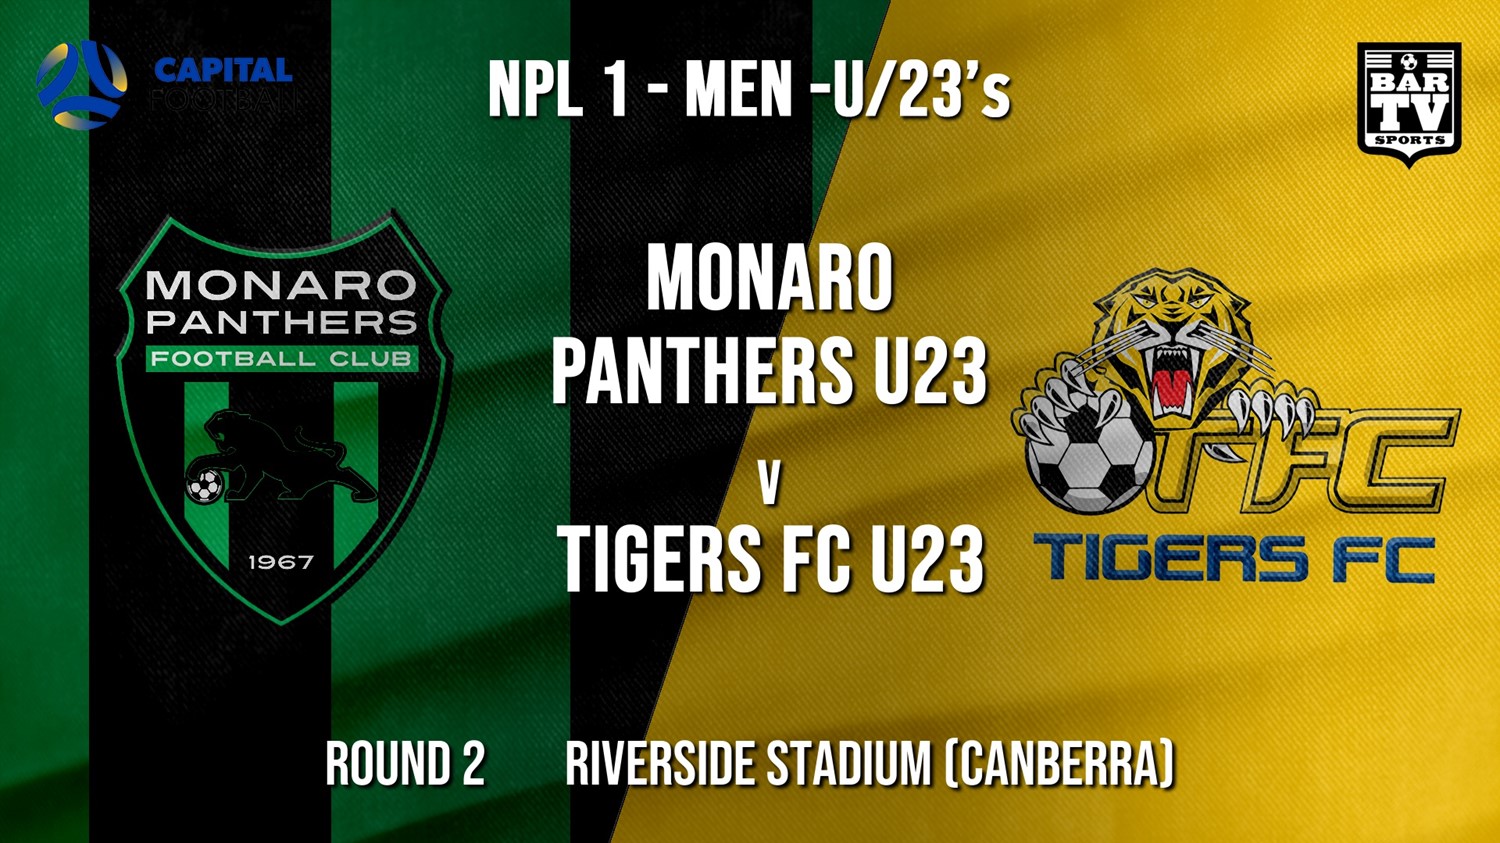 NPL Youth - Capital Round 2 - Monaro Panthers U23 v Tigers FC U23 Minigame Slate Image